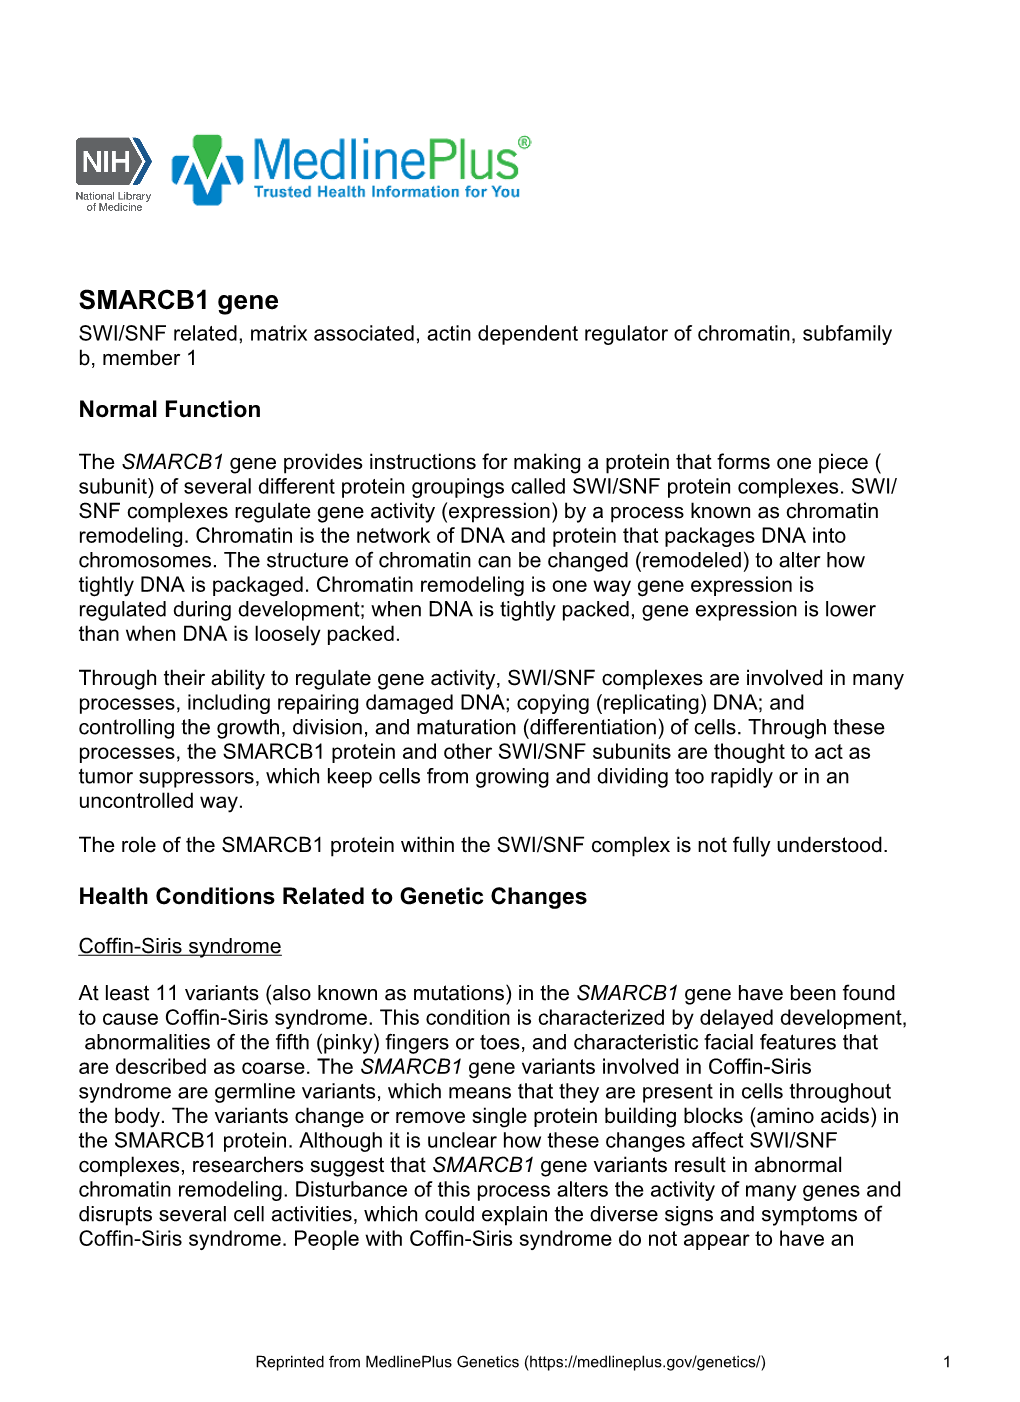 SMARCB1 Gene SWI/SNF Related, Matrix Associated, Actin Dependent Regulator of Chromatin, Subfamily B, Member 1